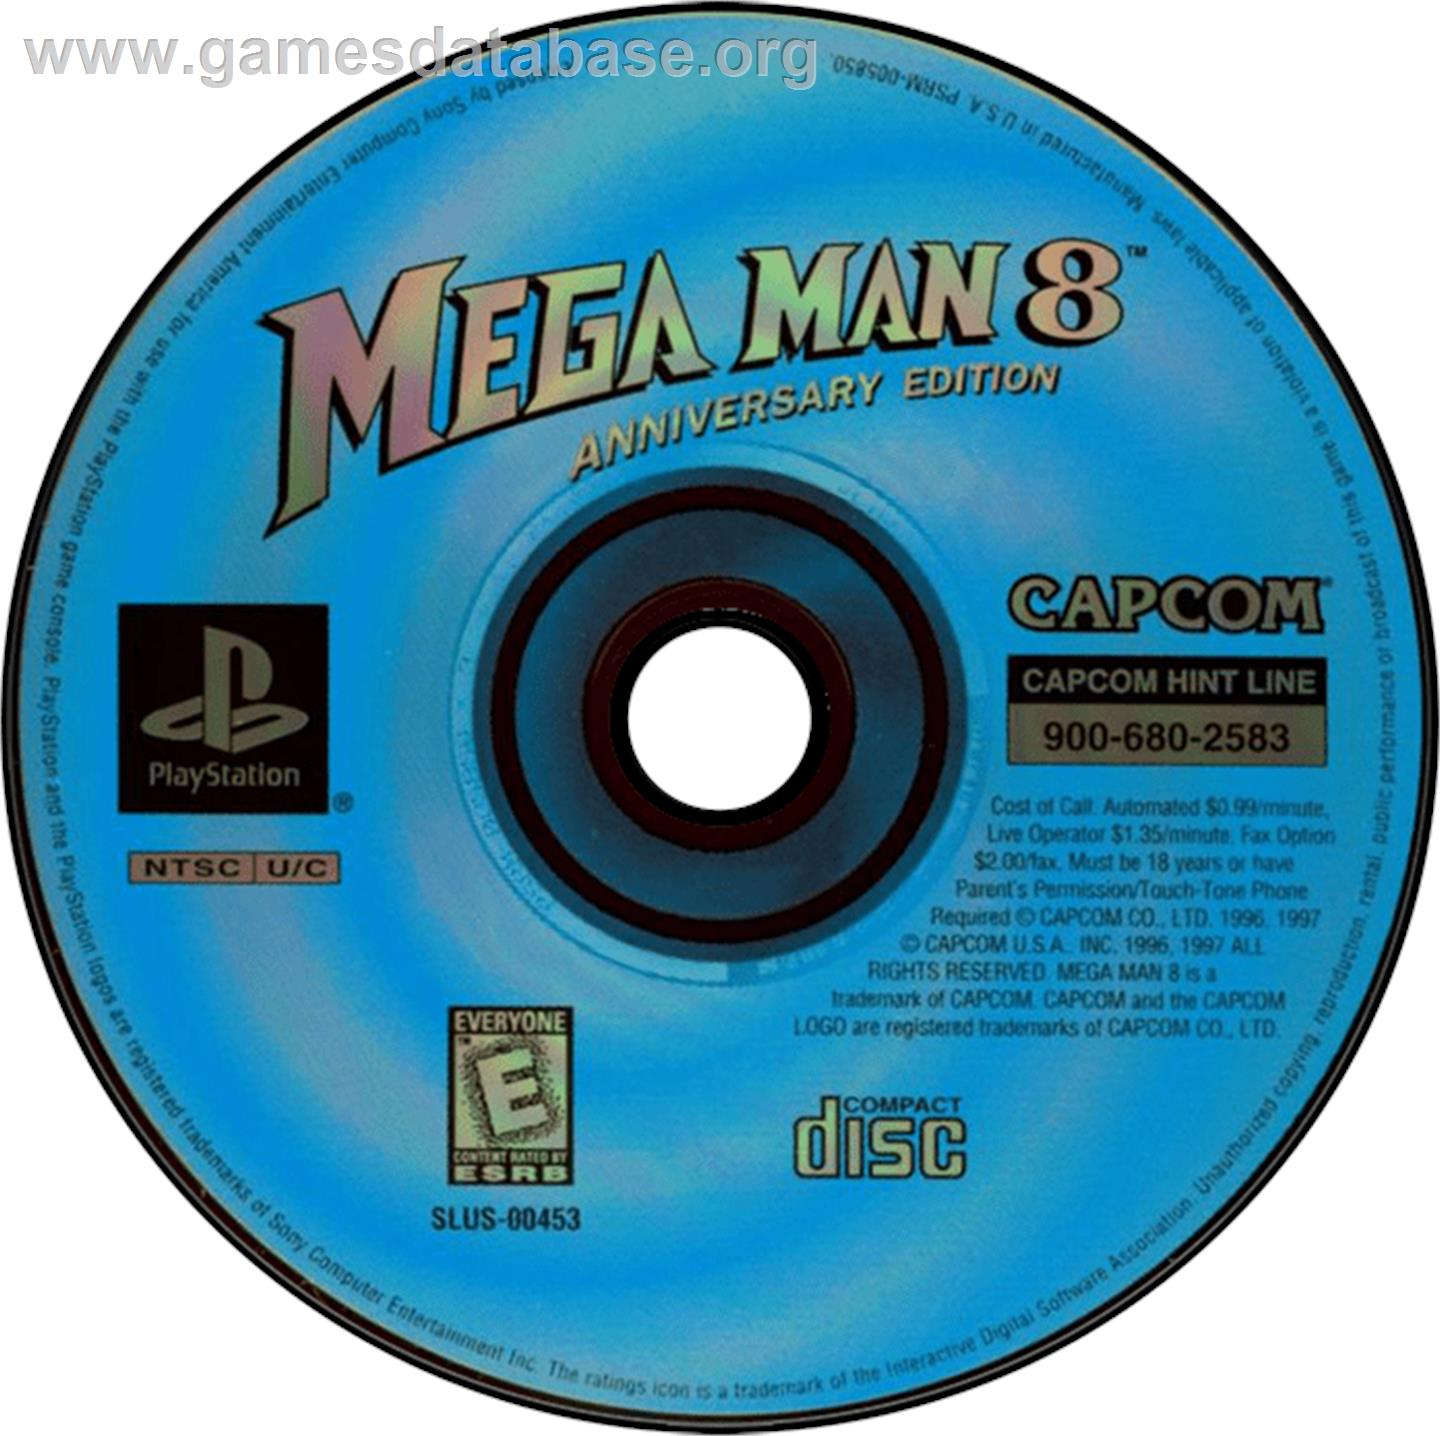 Mega Man 8: Anniversary Edition - Sony Playstation - Artwork - Disc